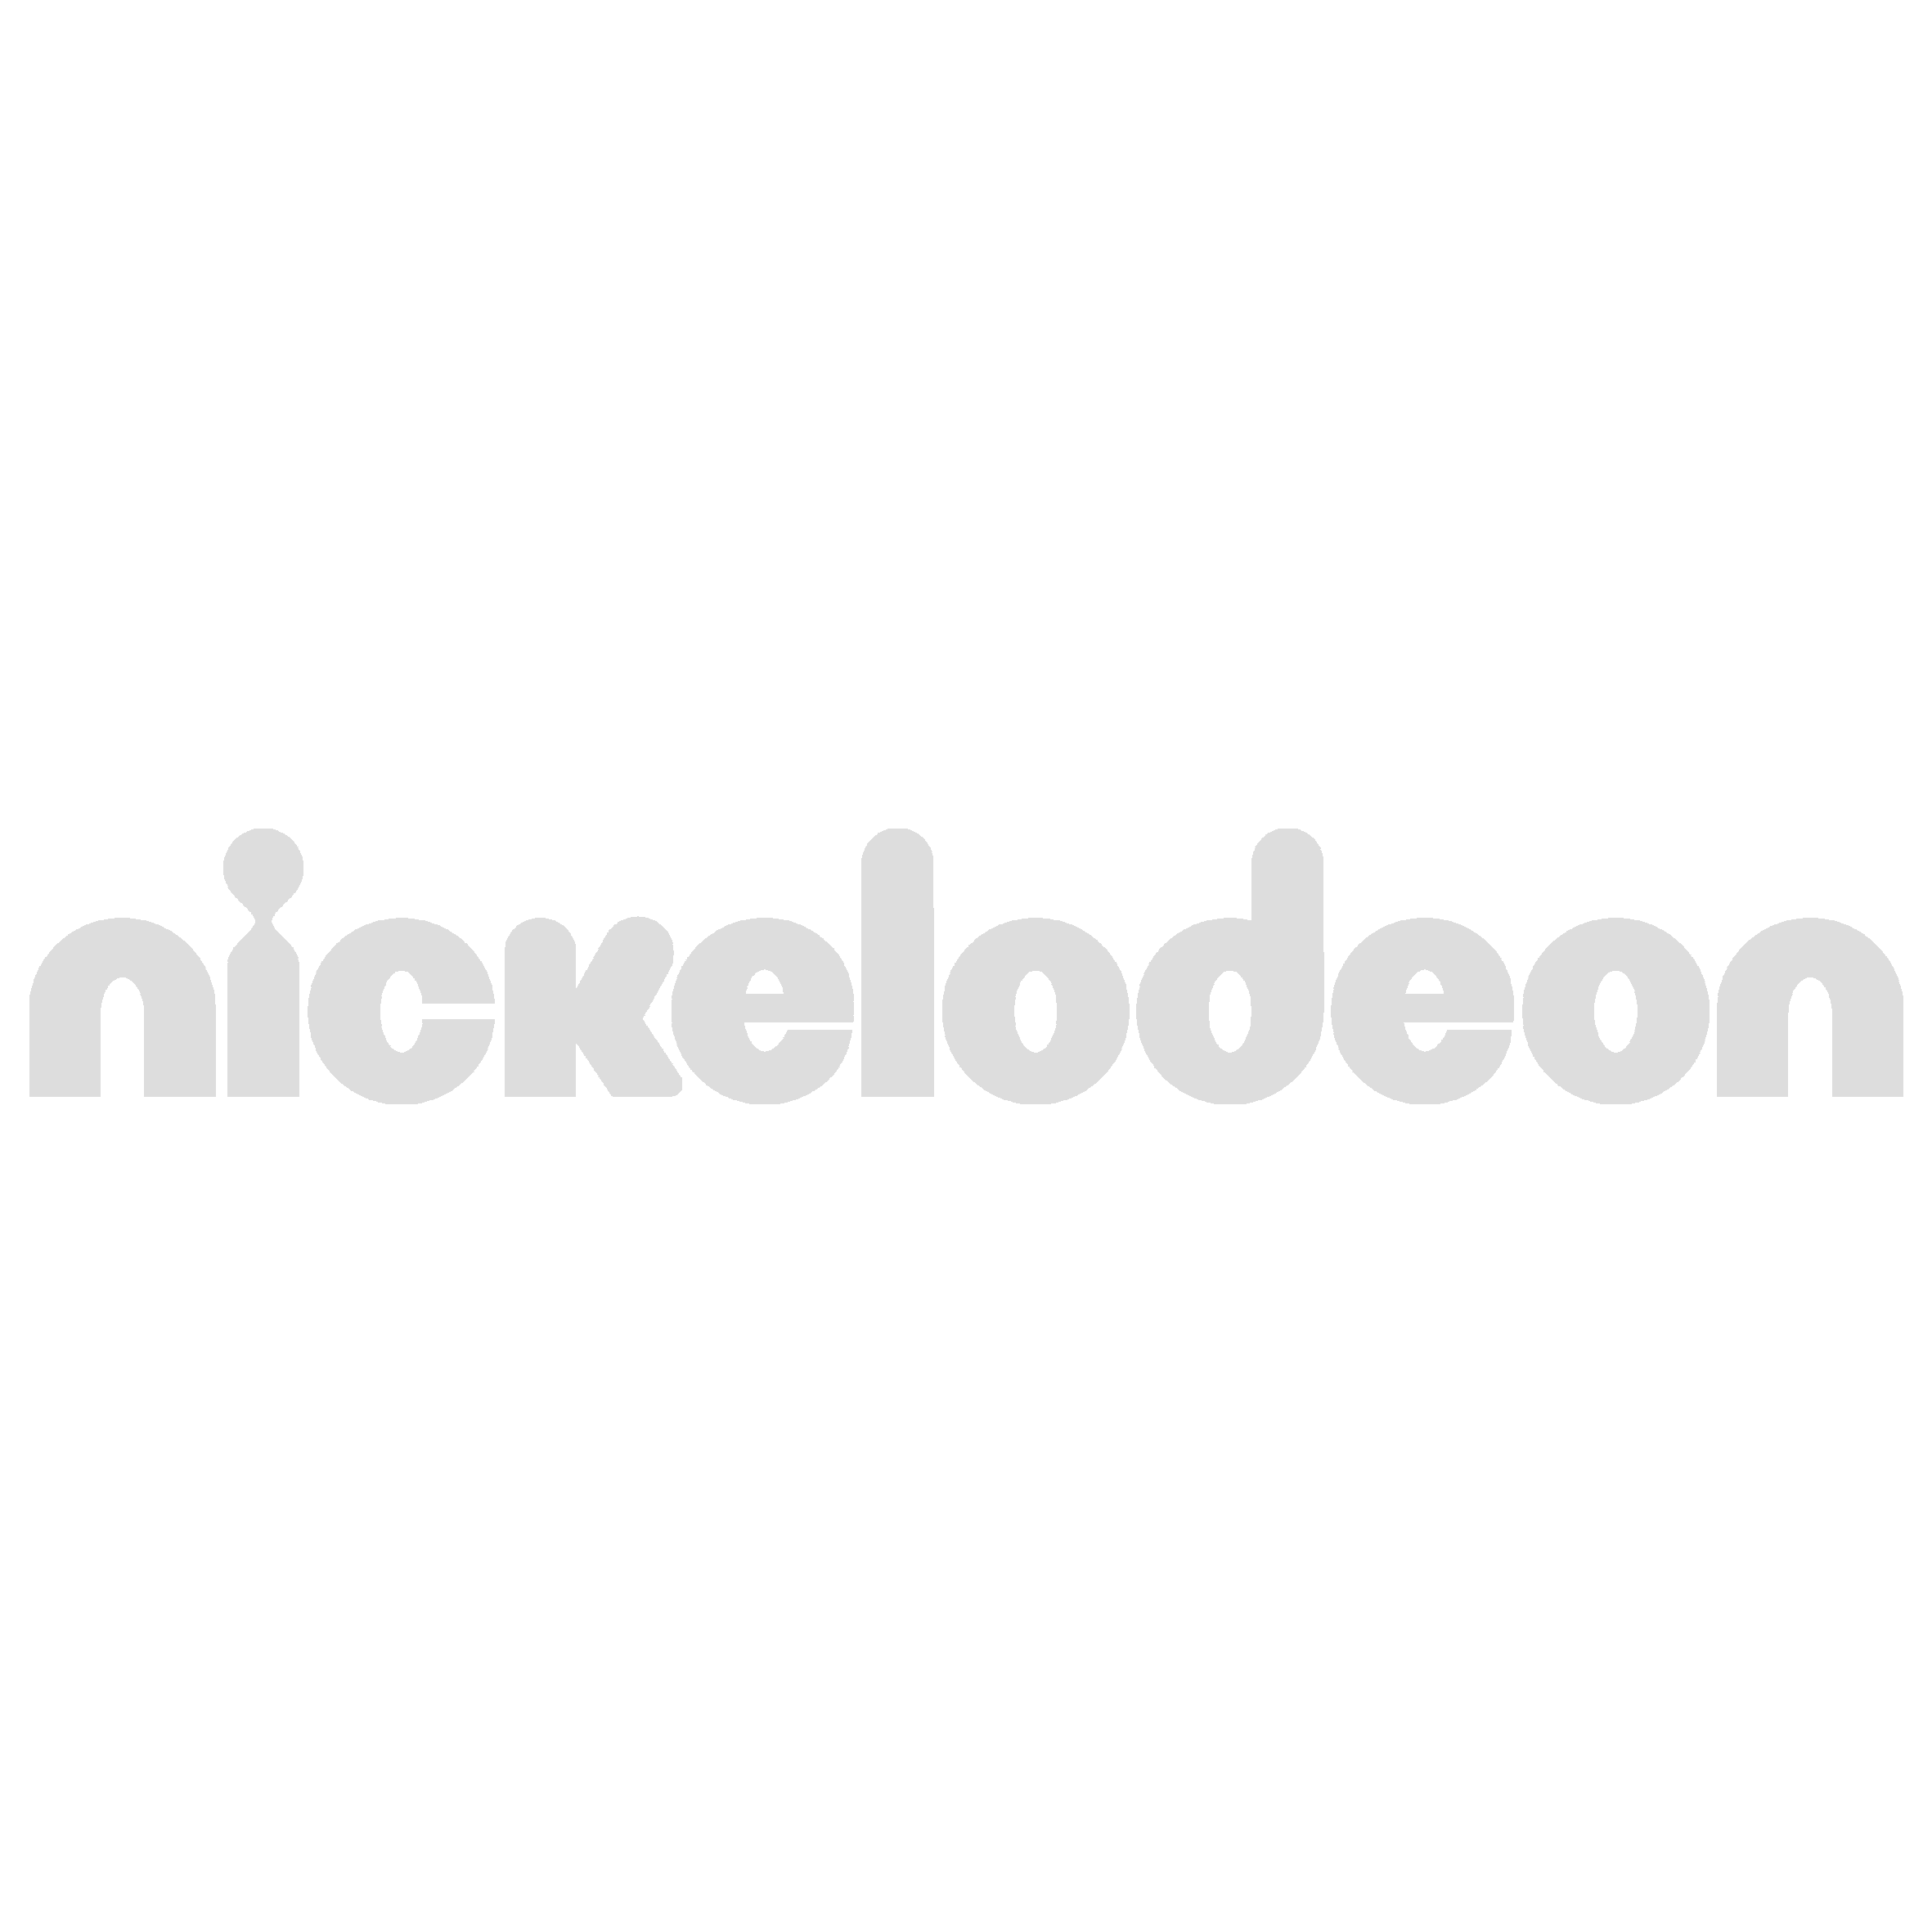 Nickelodeon logo - Transfer